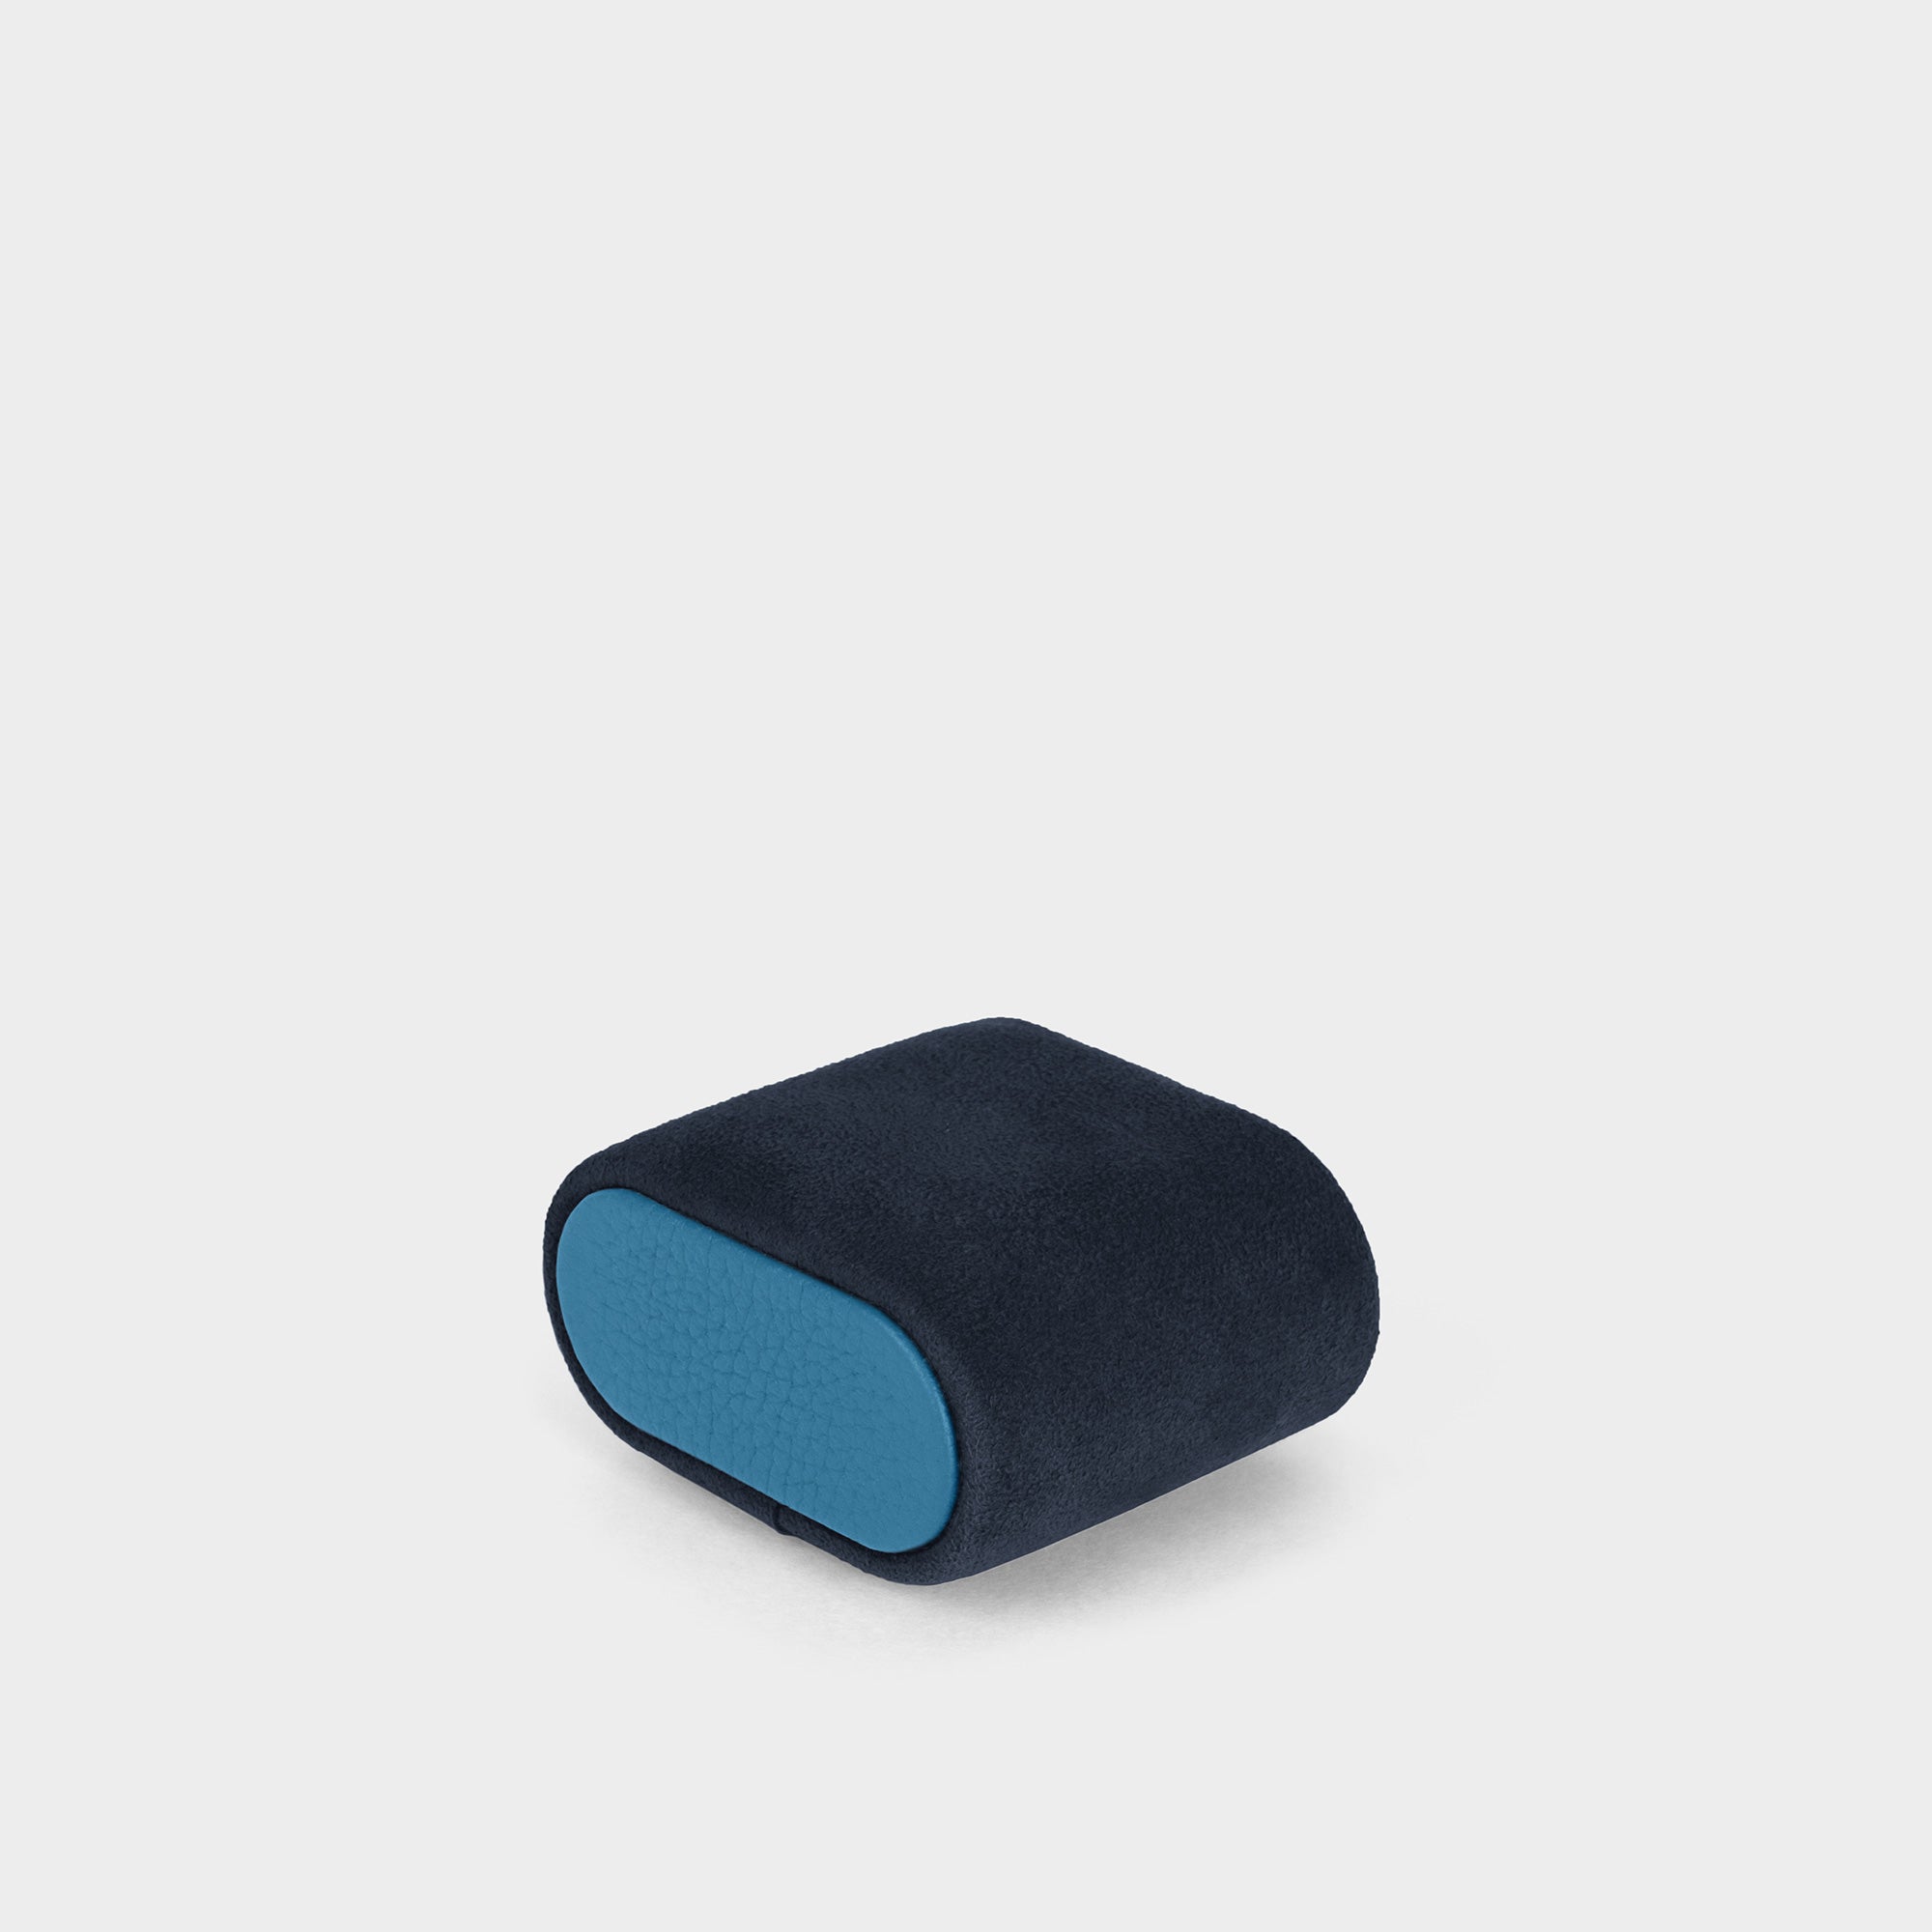 Deep blue removable Alcantara cushion with sky blue leather sides